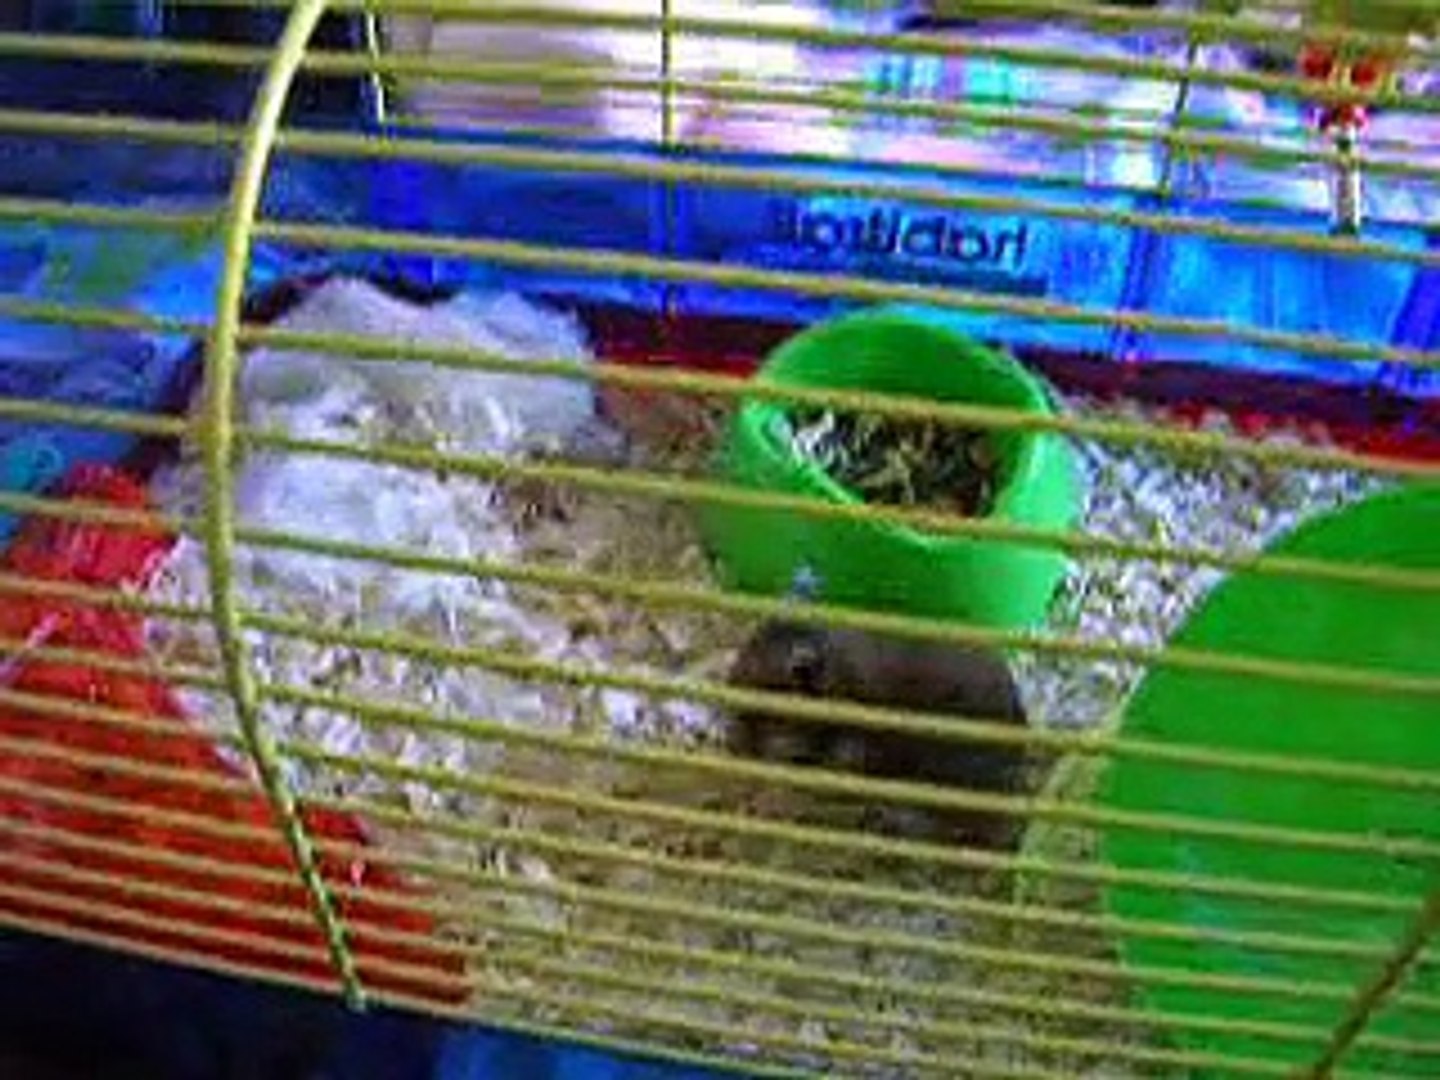 Mon hamster au travail - Hard working hamster